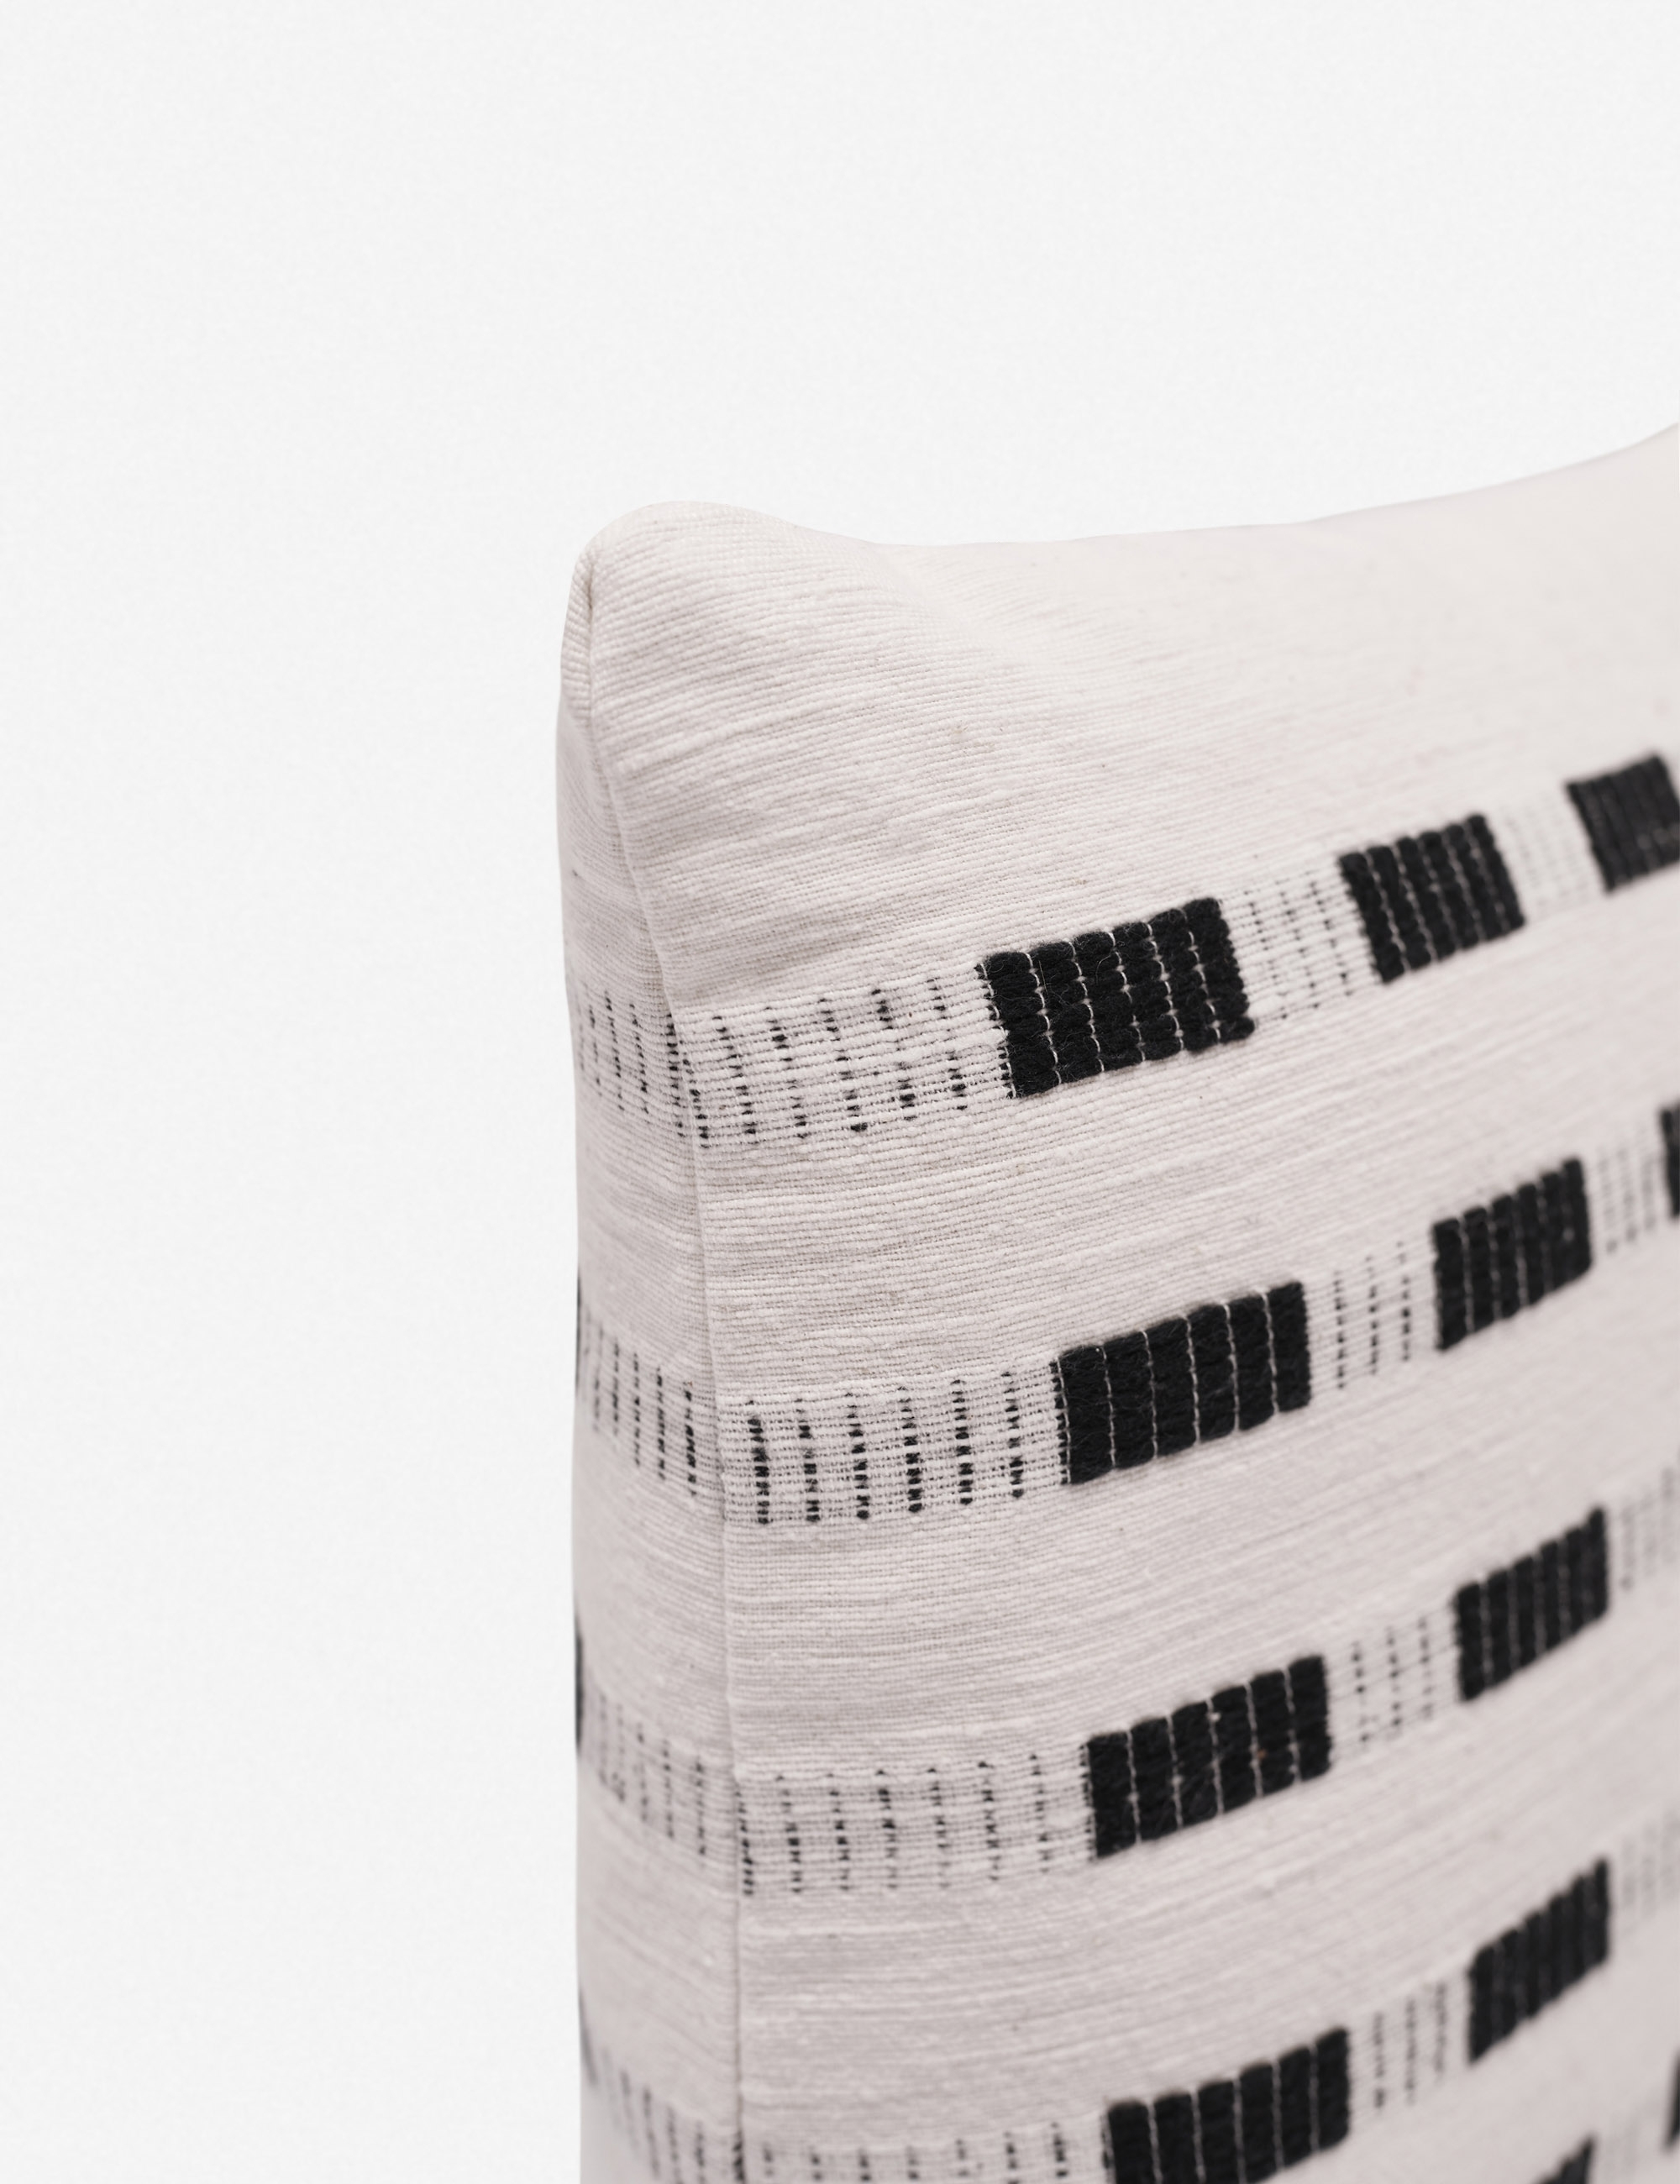 Bolé Road Textiles Bertu Pillow, Onyx, 20" x 20" - Image 1